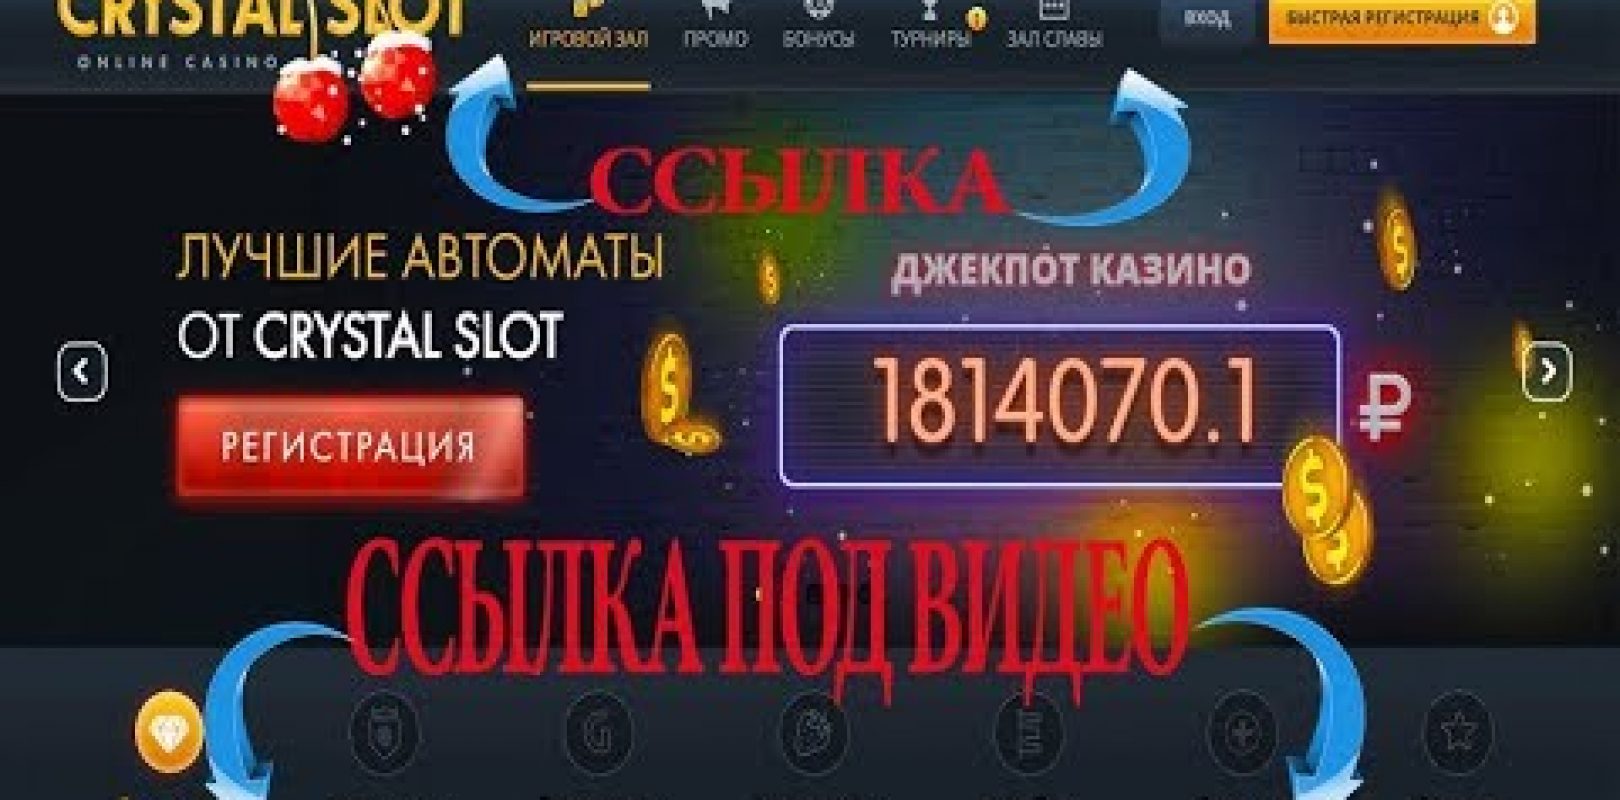 Casino bitcoin na bet365